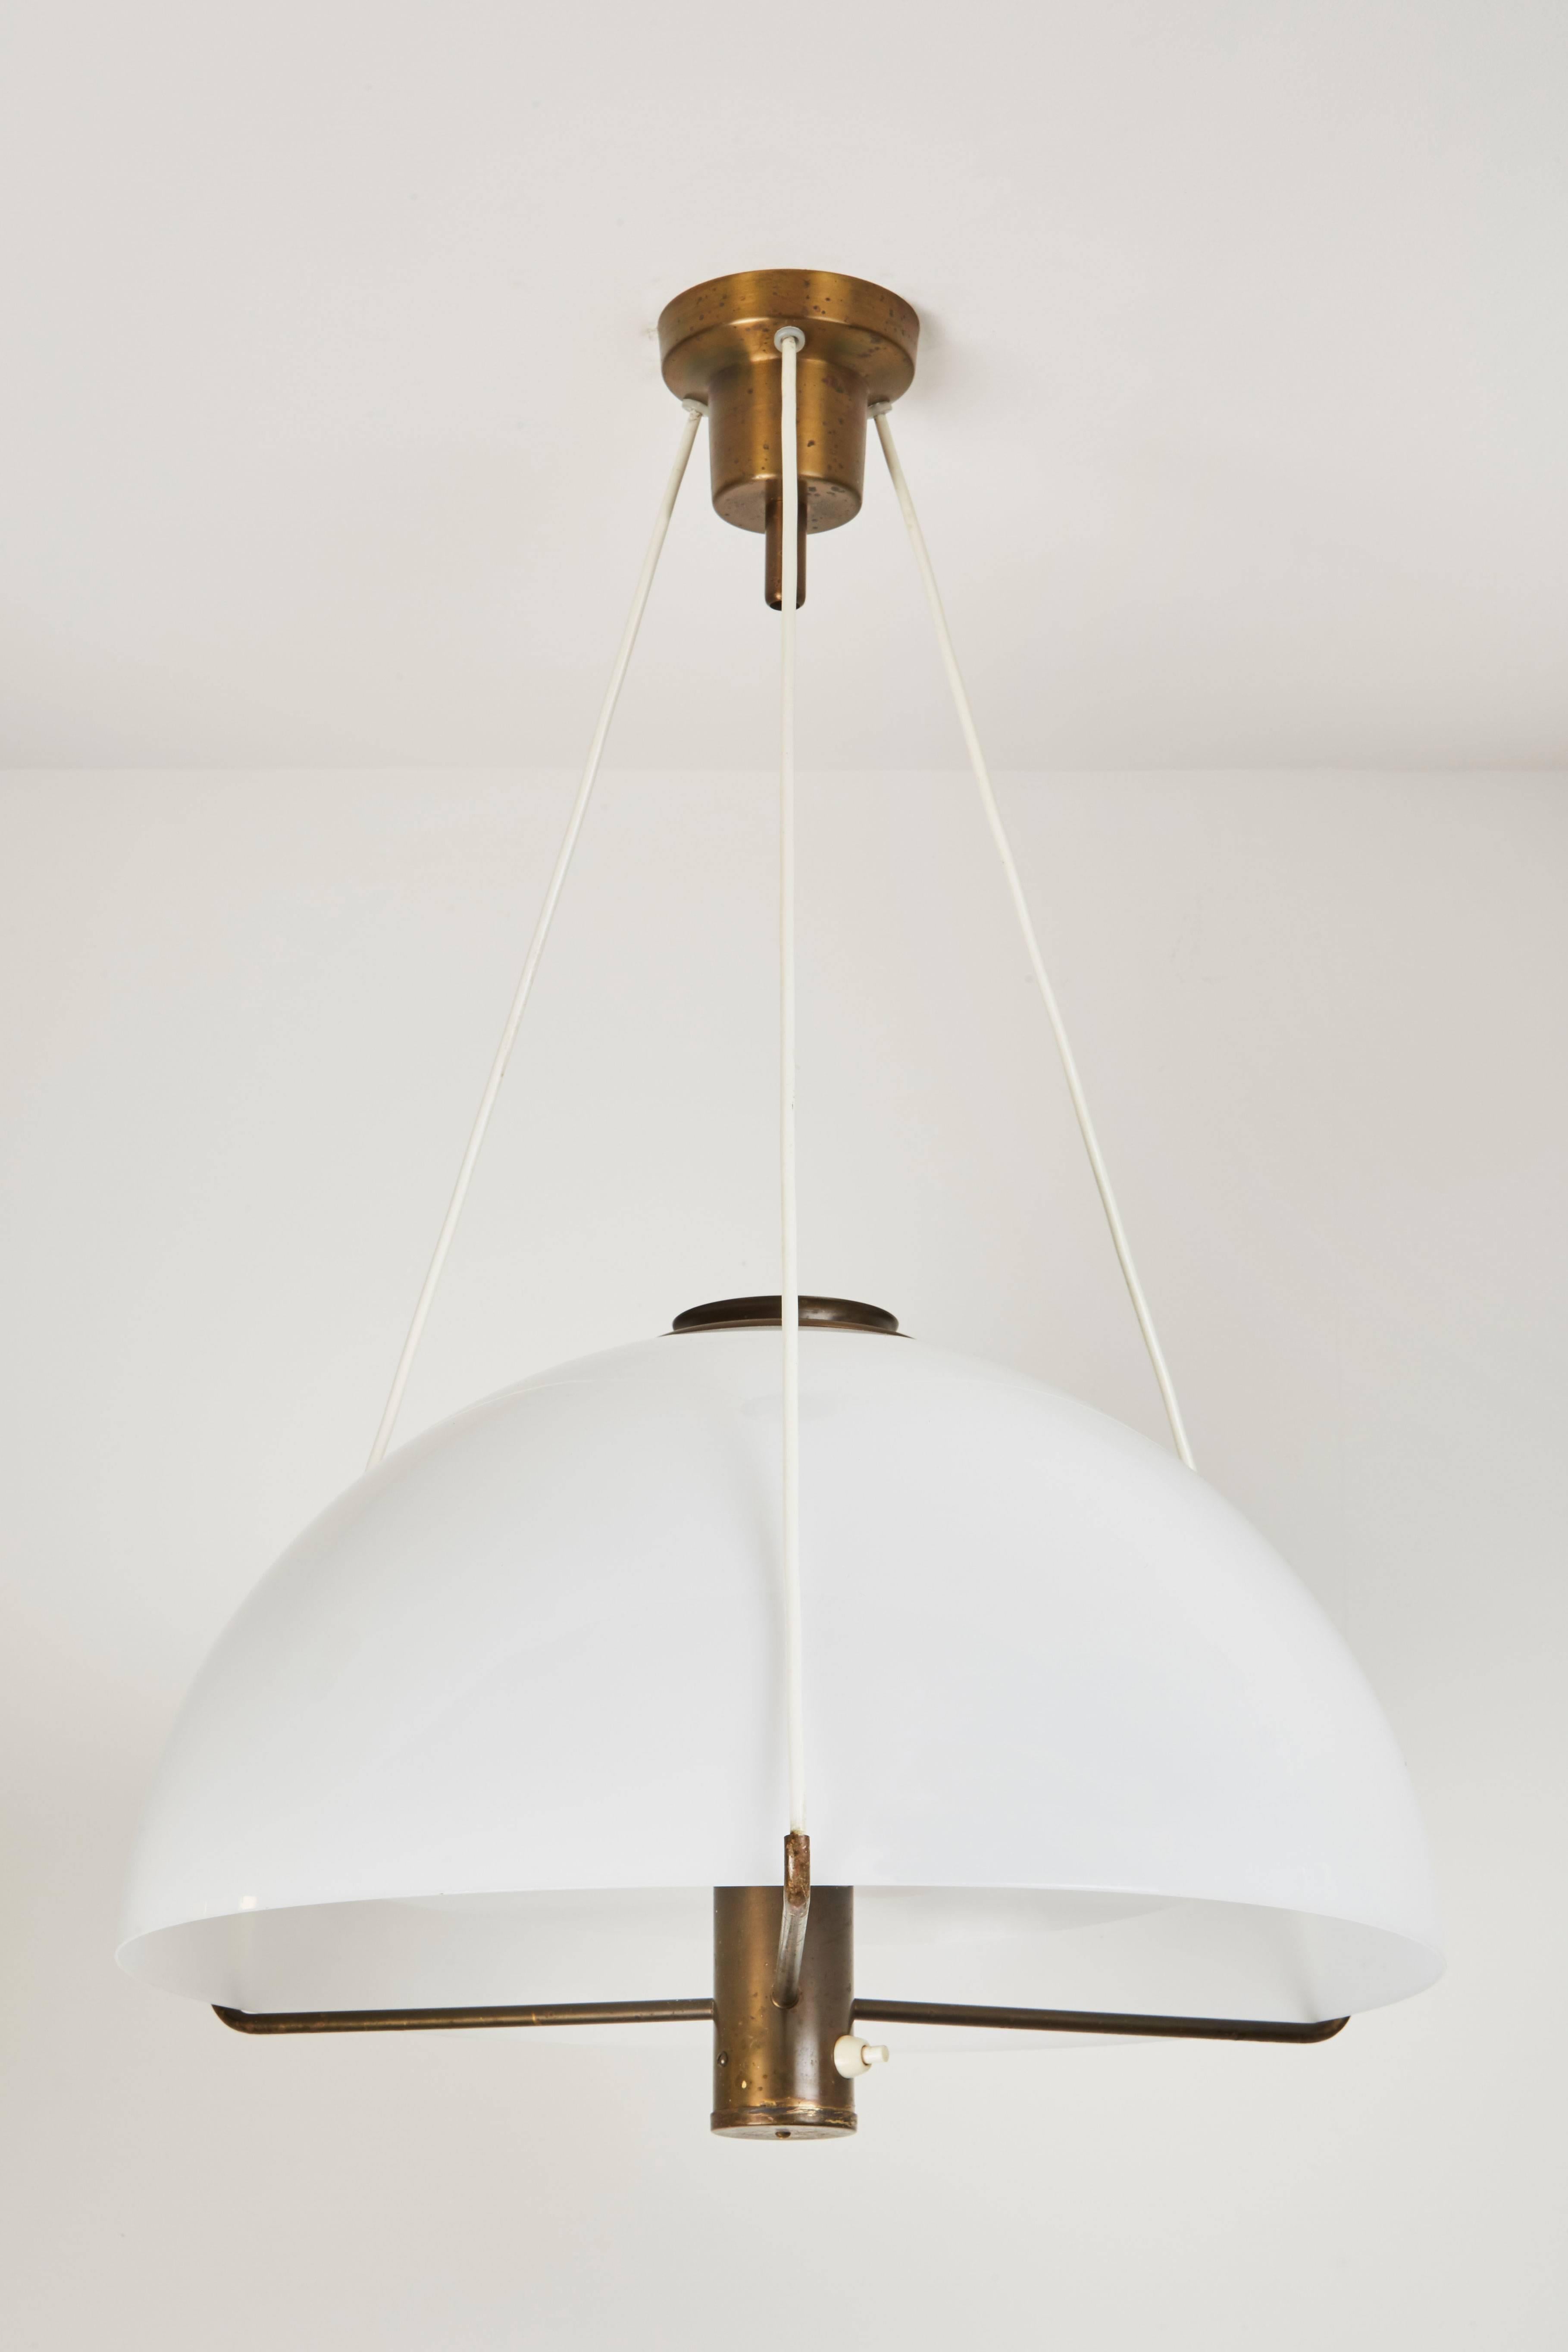 Danish Suspension Light by Hans-Agne Jakobsson for Markyard